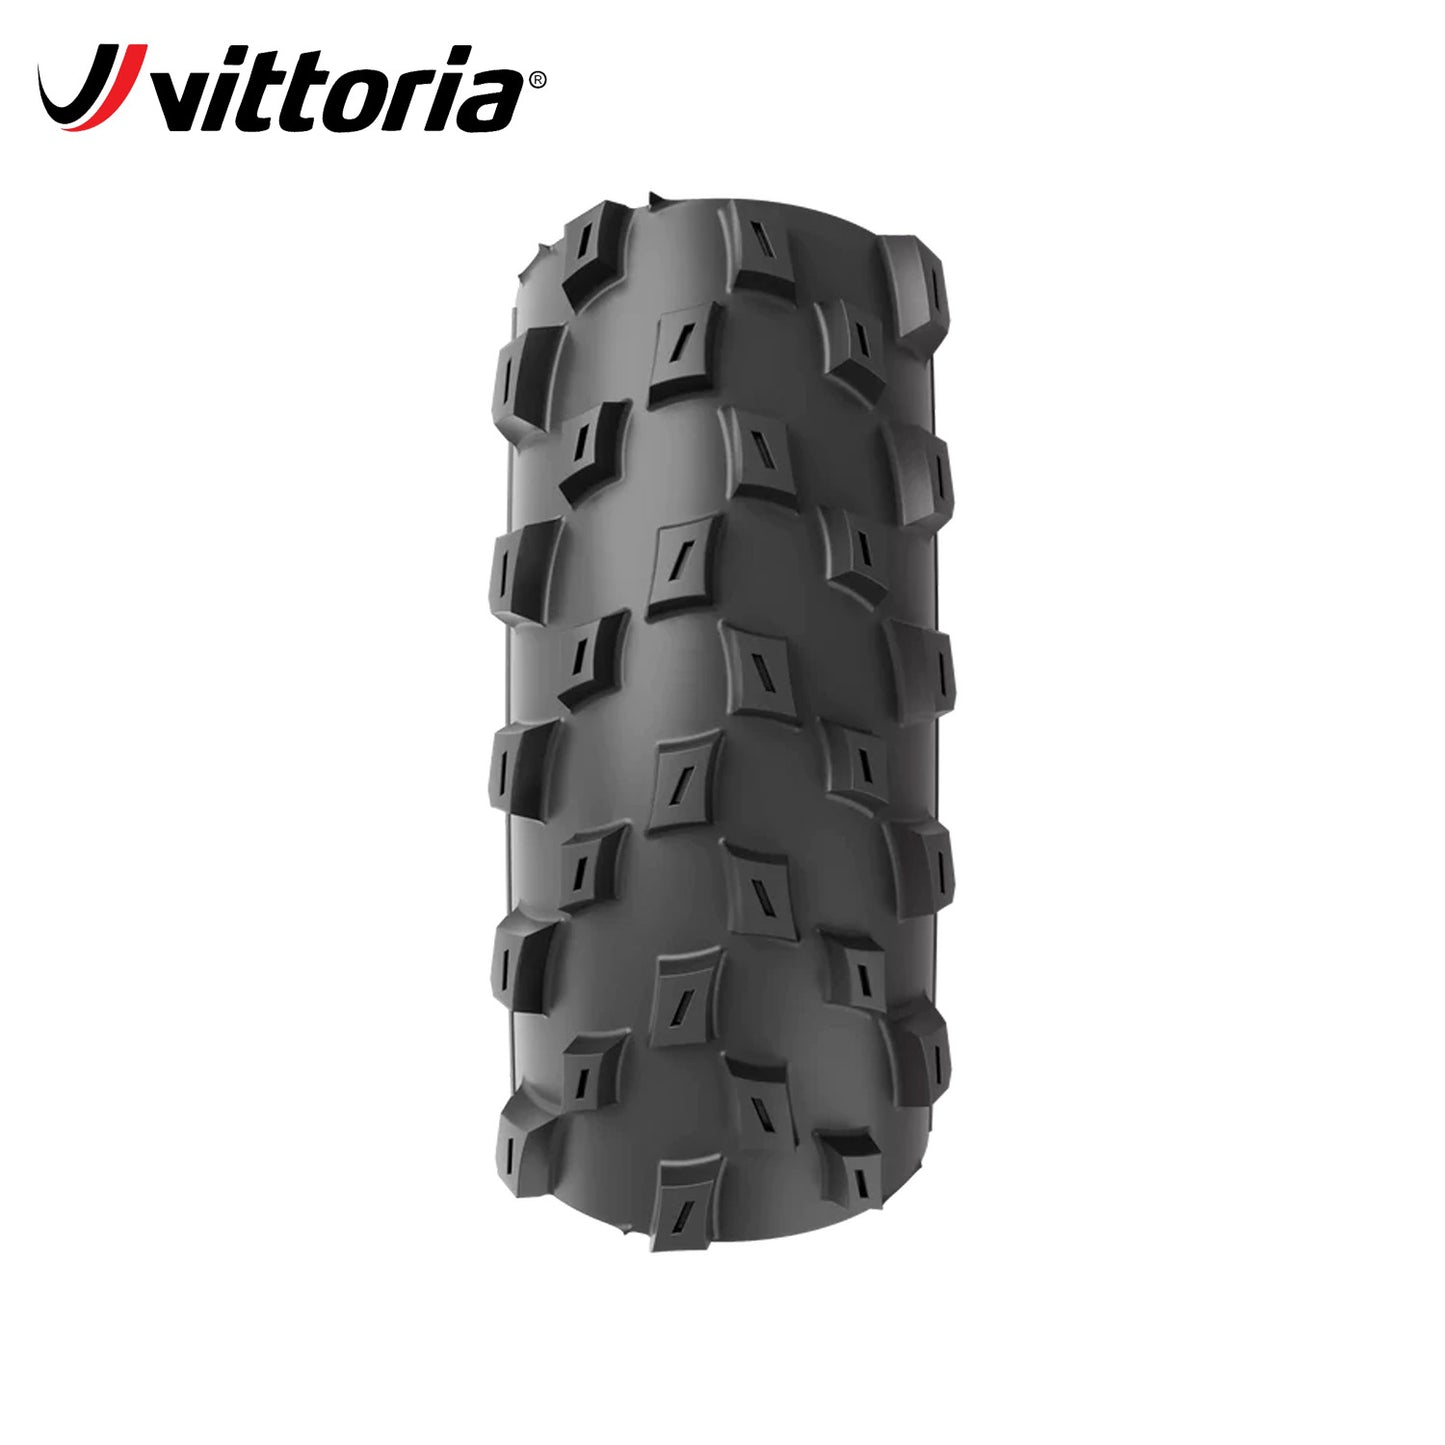 Vittoria Barzo MTB All-Rounder / XC UCI-Licensed Tubeless Ready Tire 29er - Black